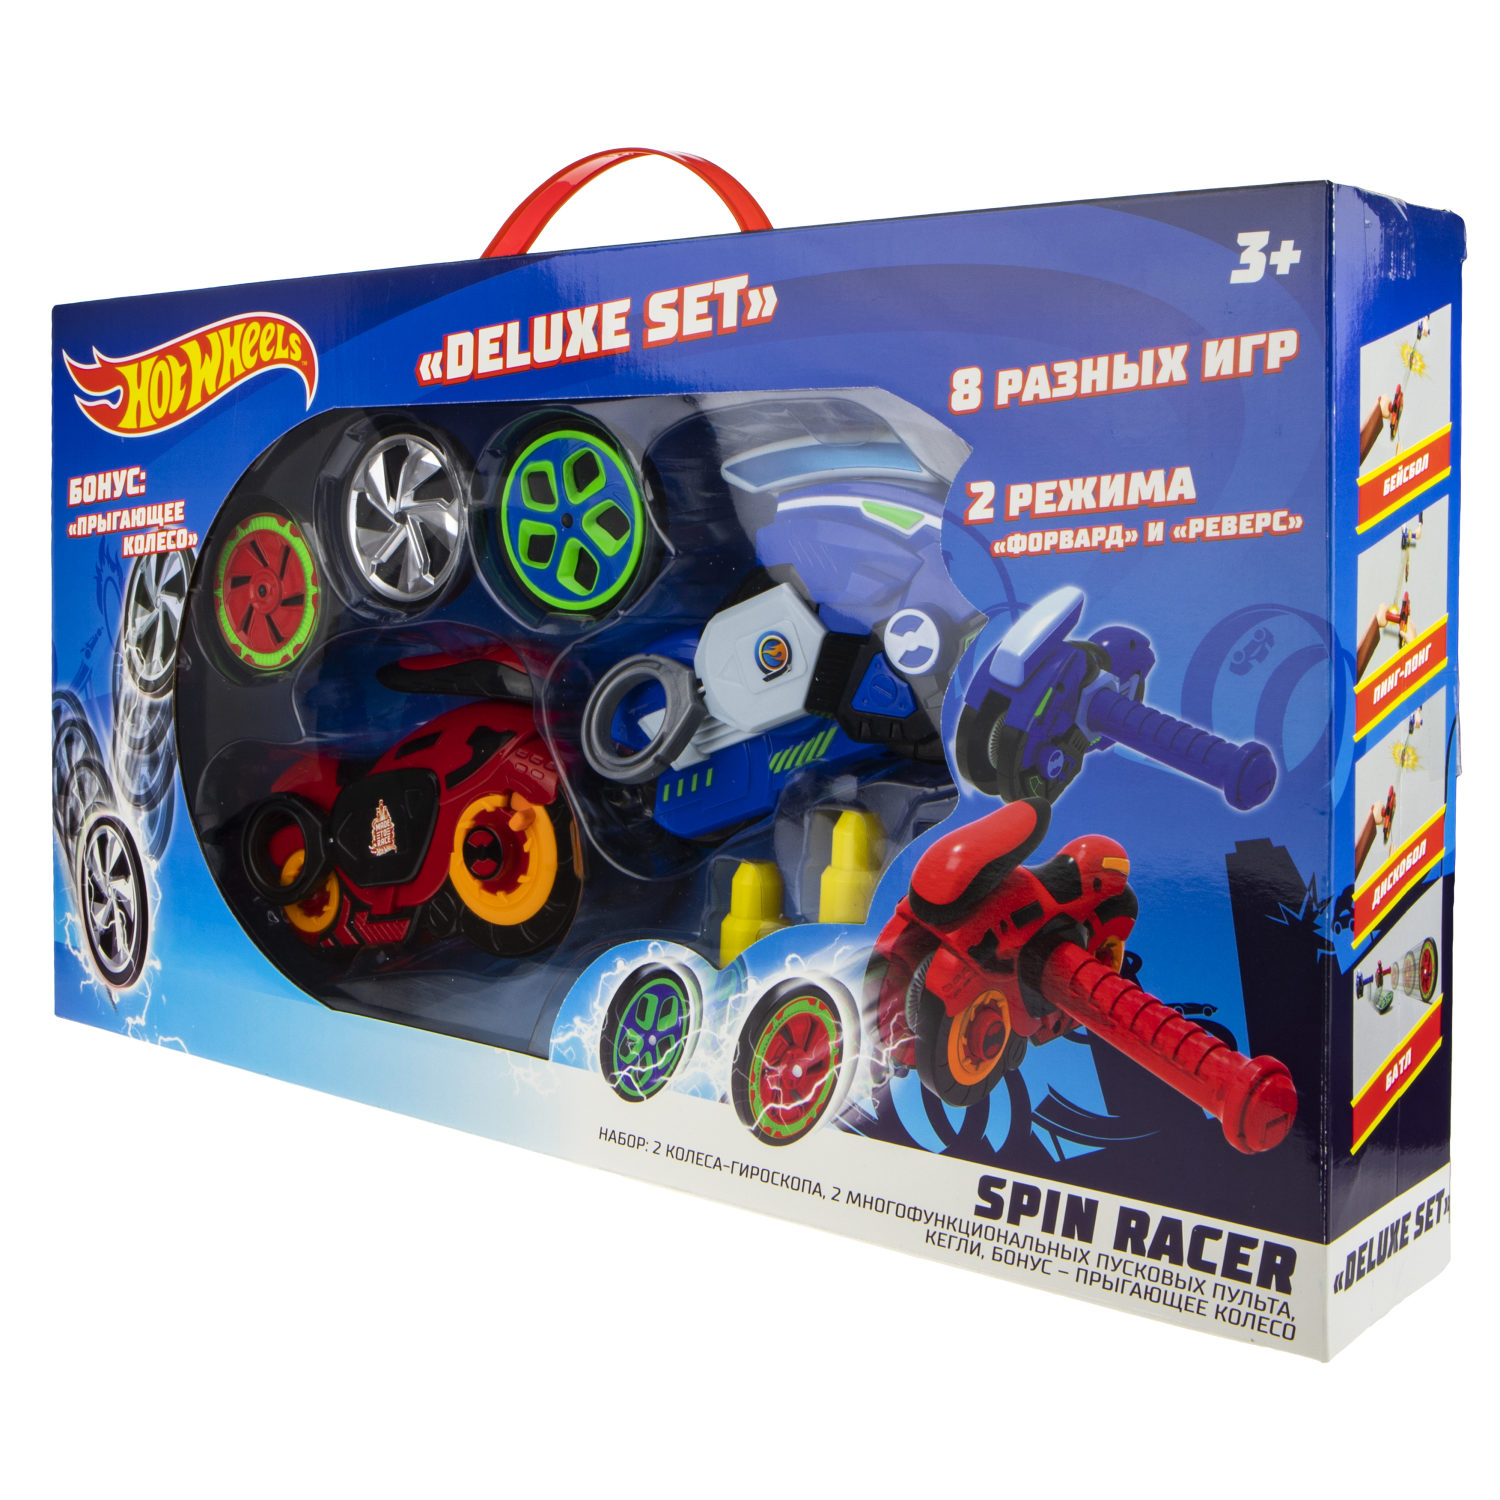 Игровой набор Hot Wheels Spin Racer Deluxe Set  